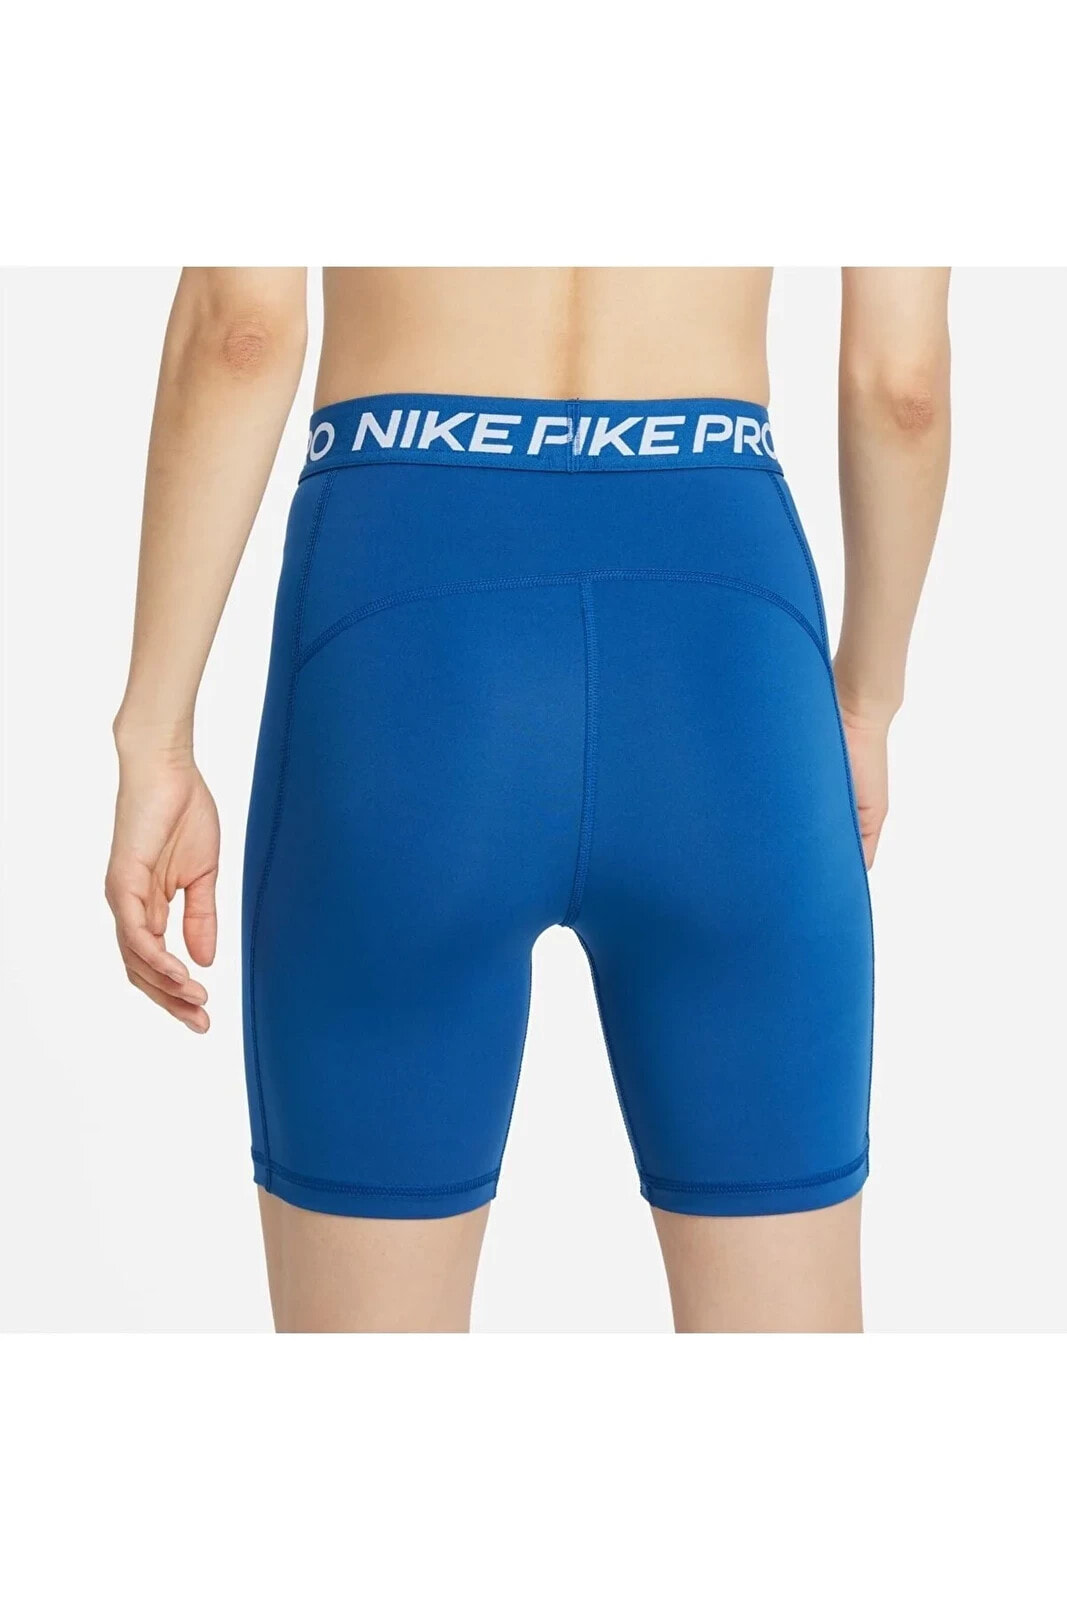 Nike Pro w NP 365 shorts Black шорты. Шорты женские Nike Pro Combat. Da0481 Nike. Шорты Seven Lab голубой.